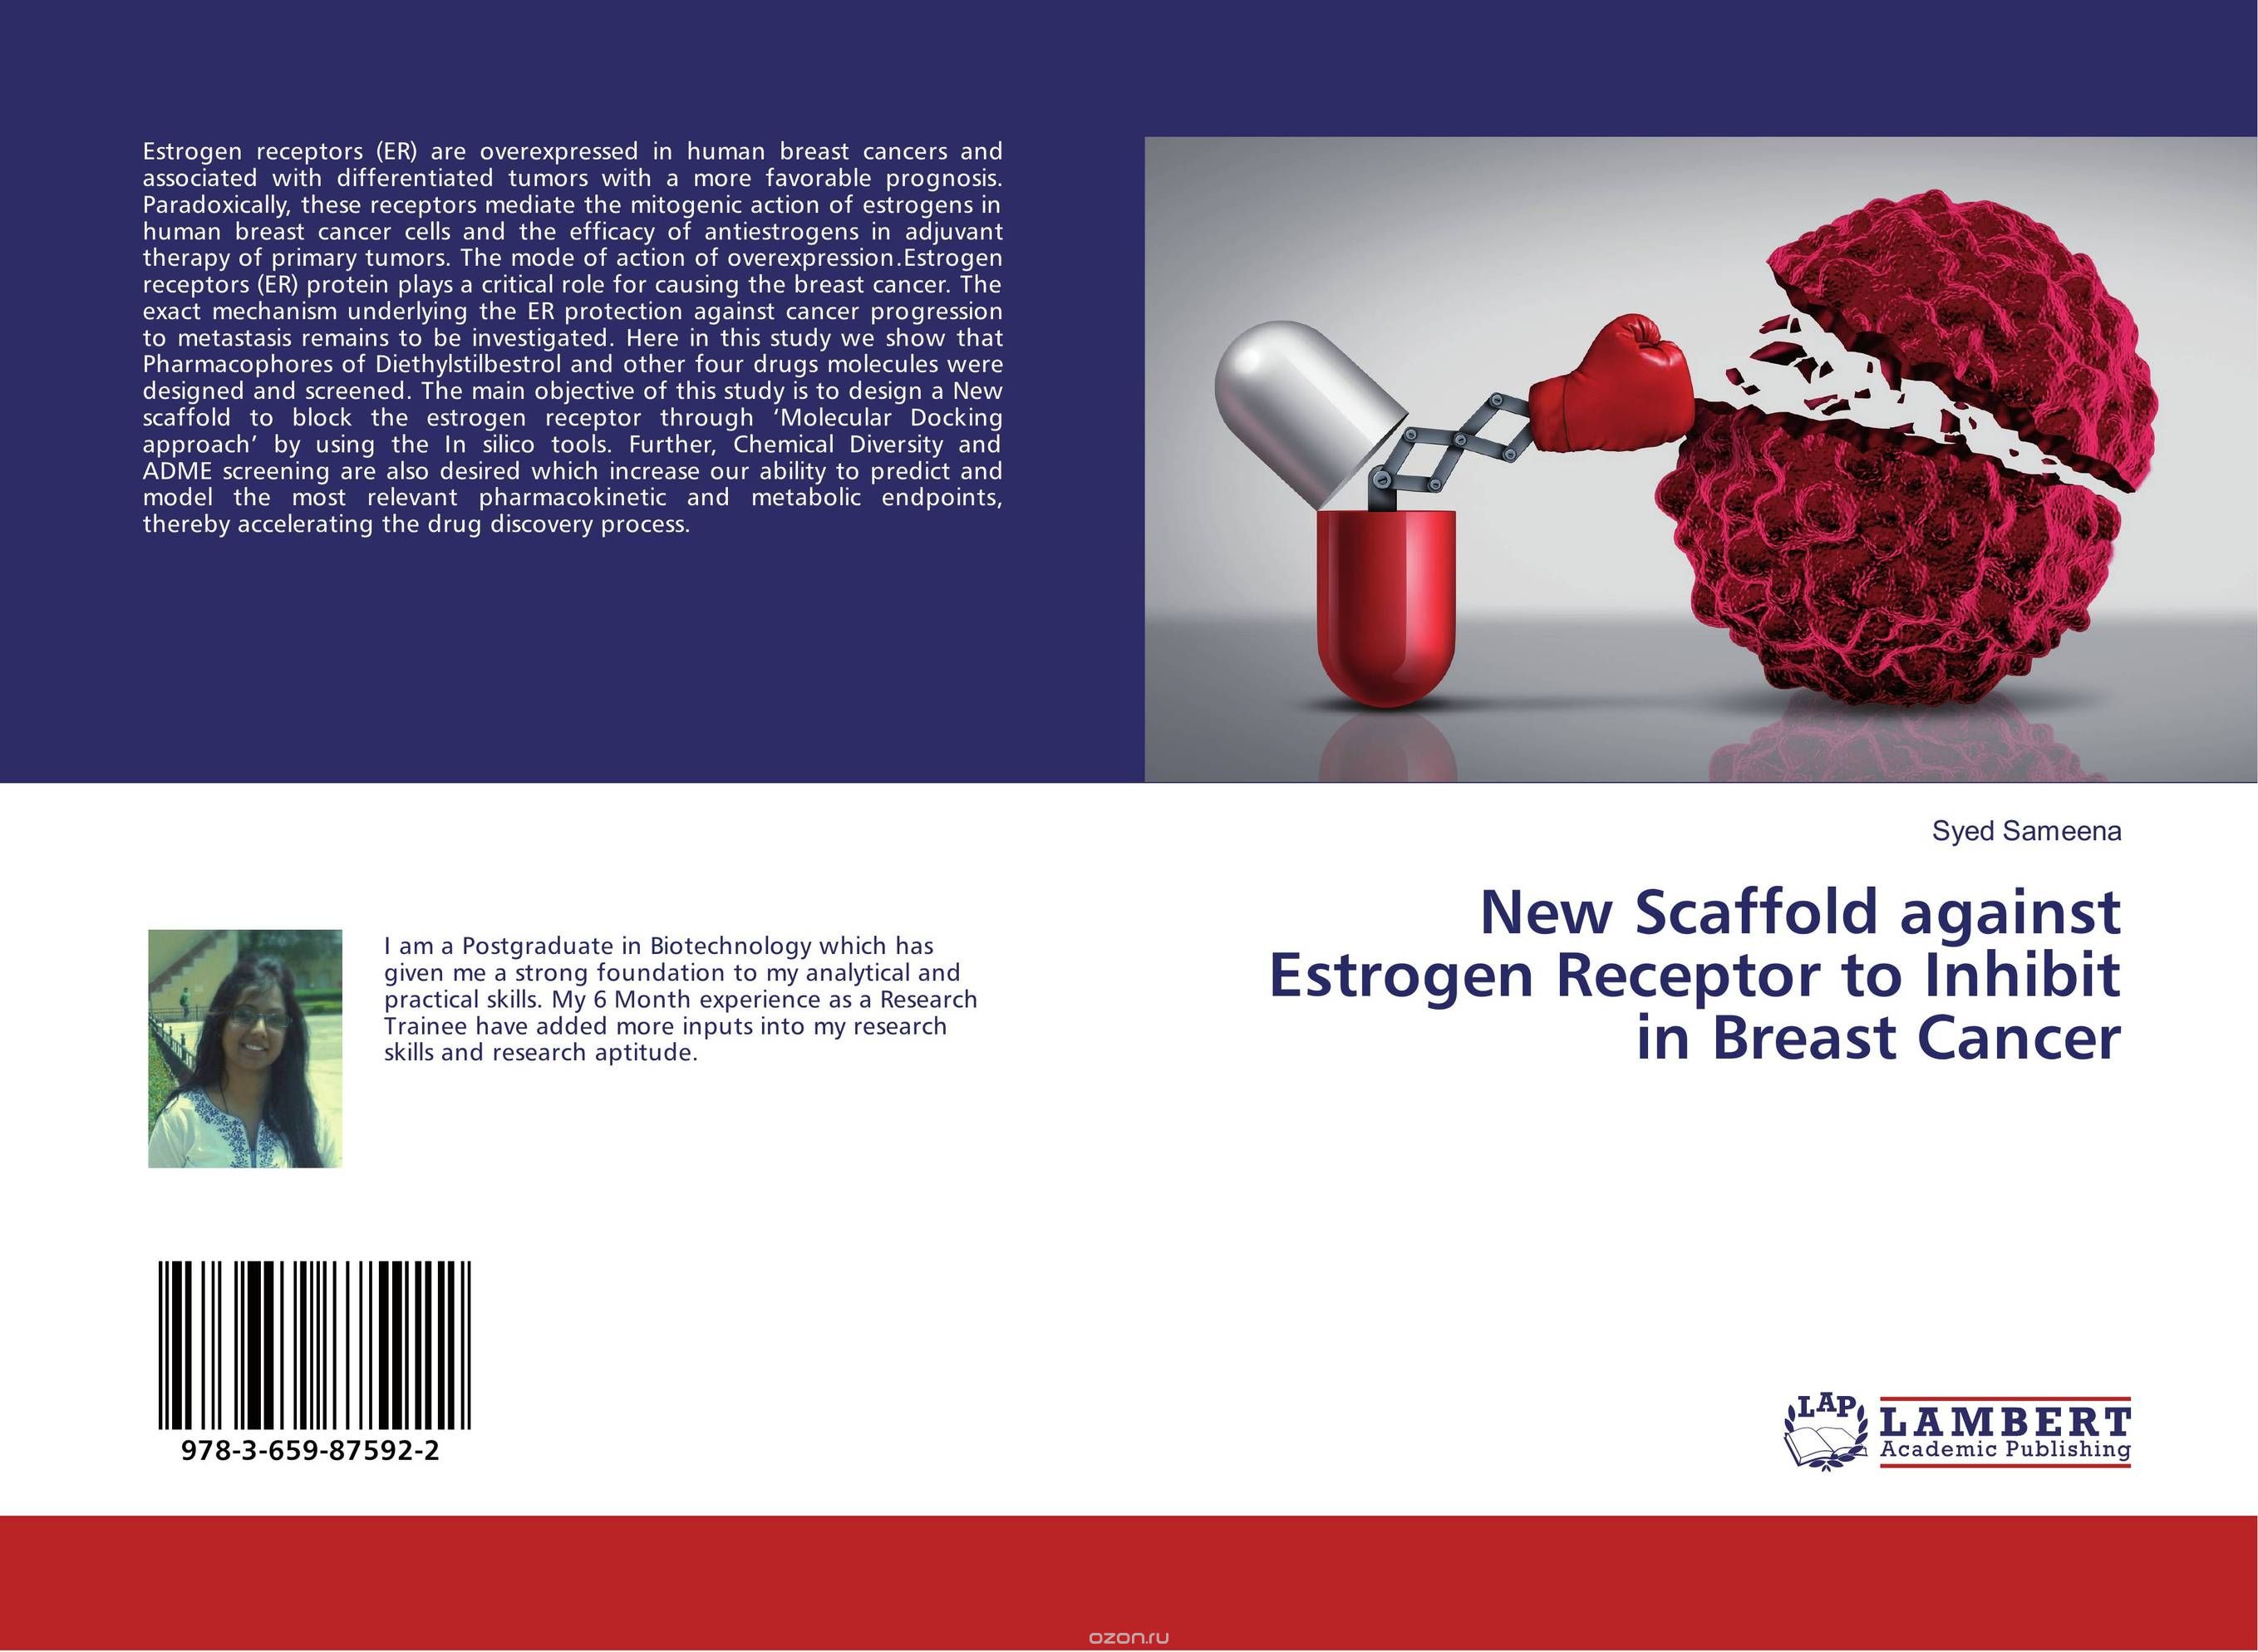 Скачать книгу "New Scaffold against Estrogen Receptor to Inhibit in Breast Cancer"